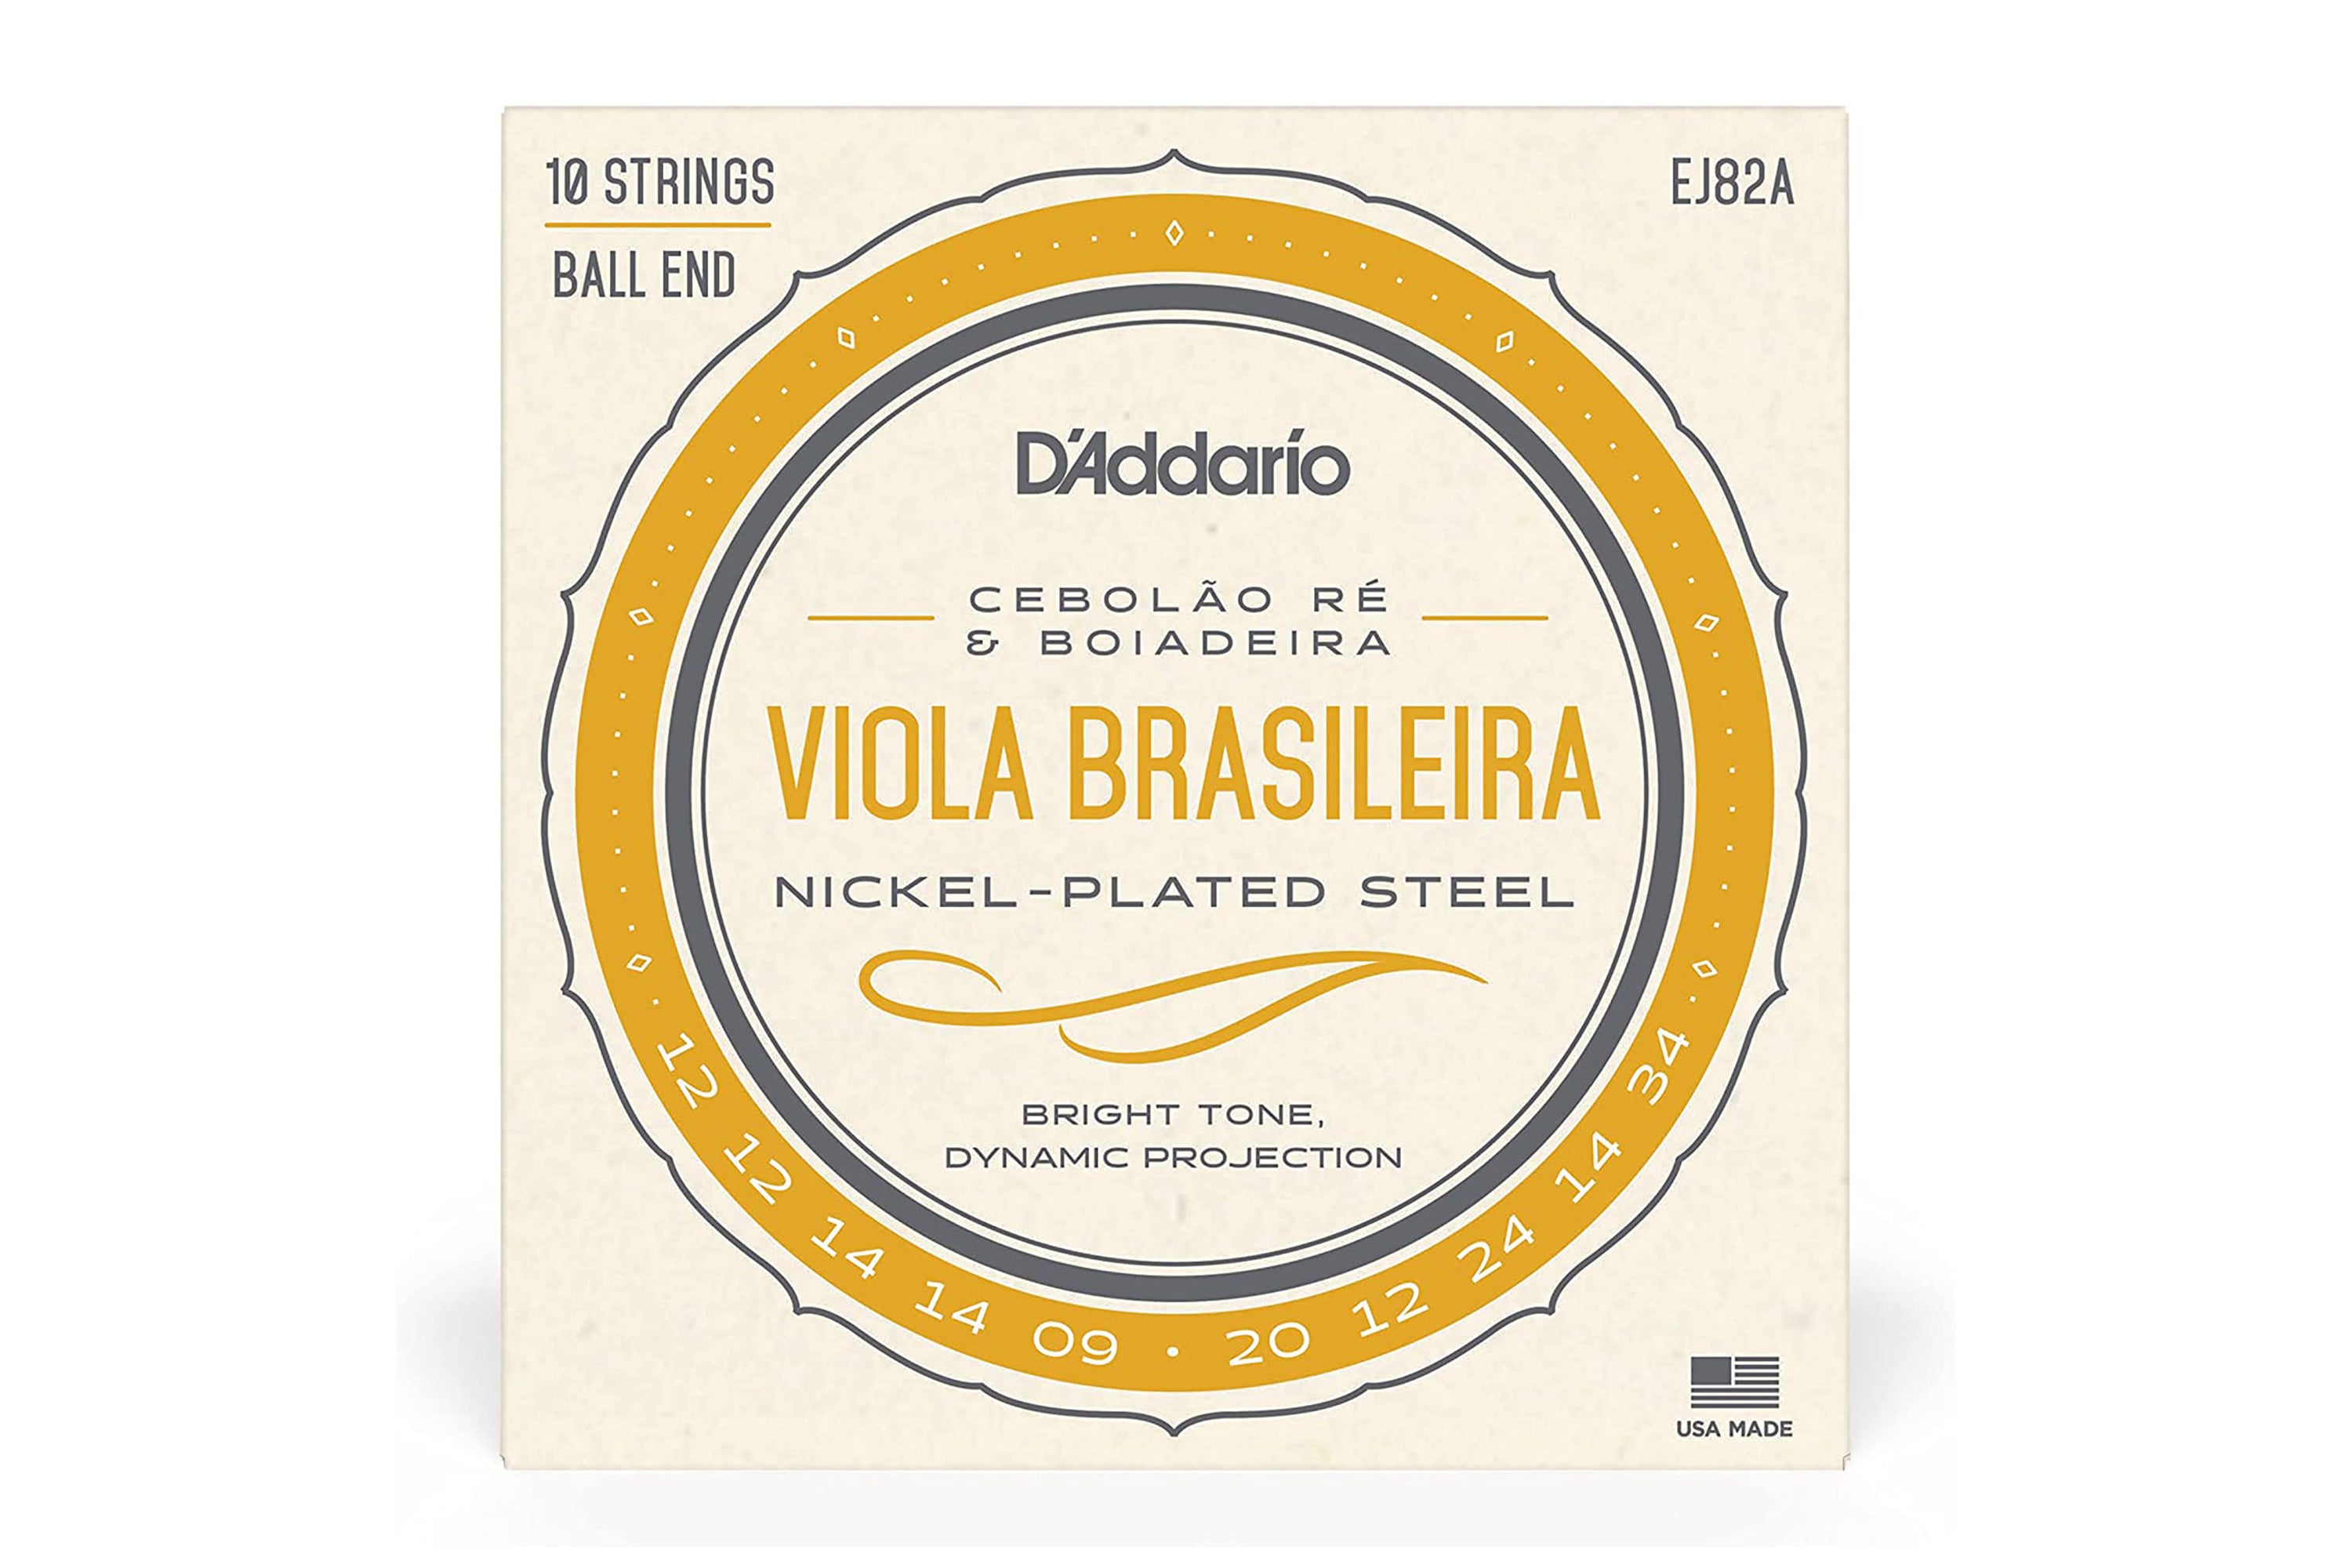 D'Addario EJ82A Nickel-Plated Steel 10-String Viola Brasileira Strings - Ball End .012-.034 Cebolao Re and Boiadeira